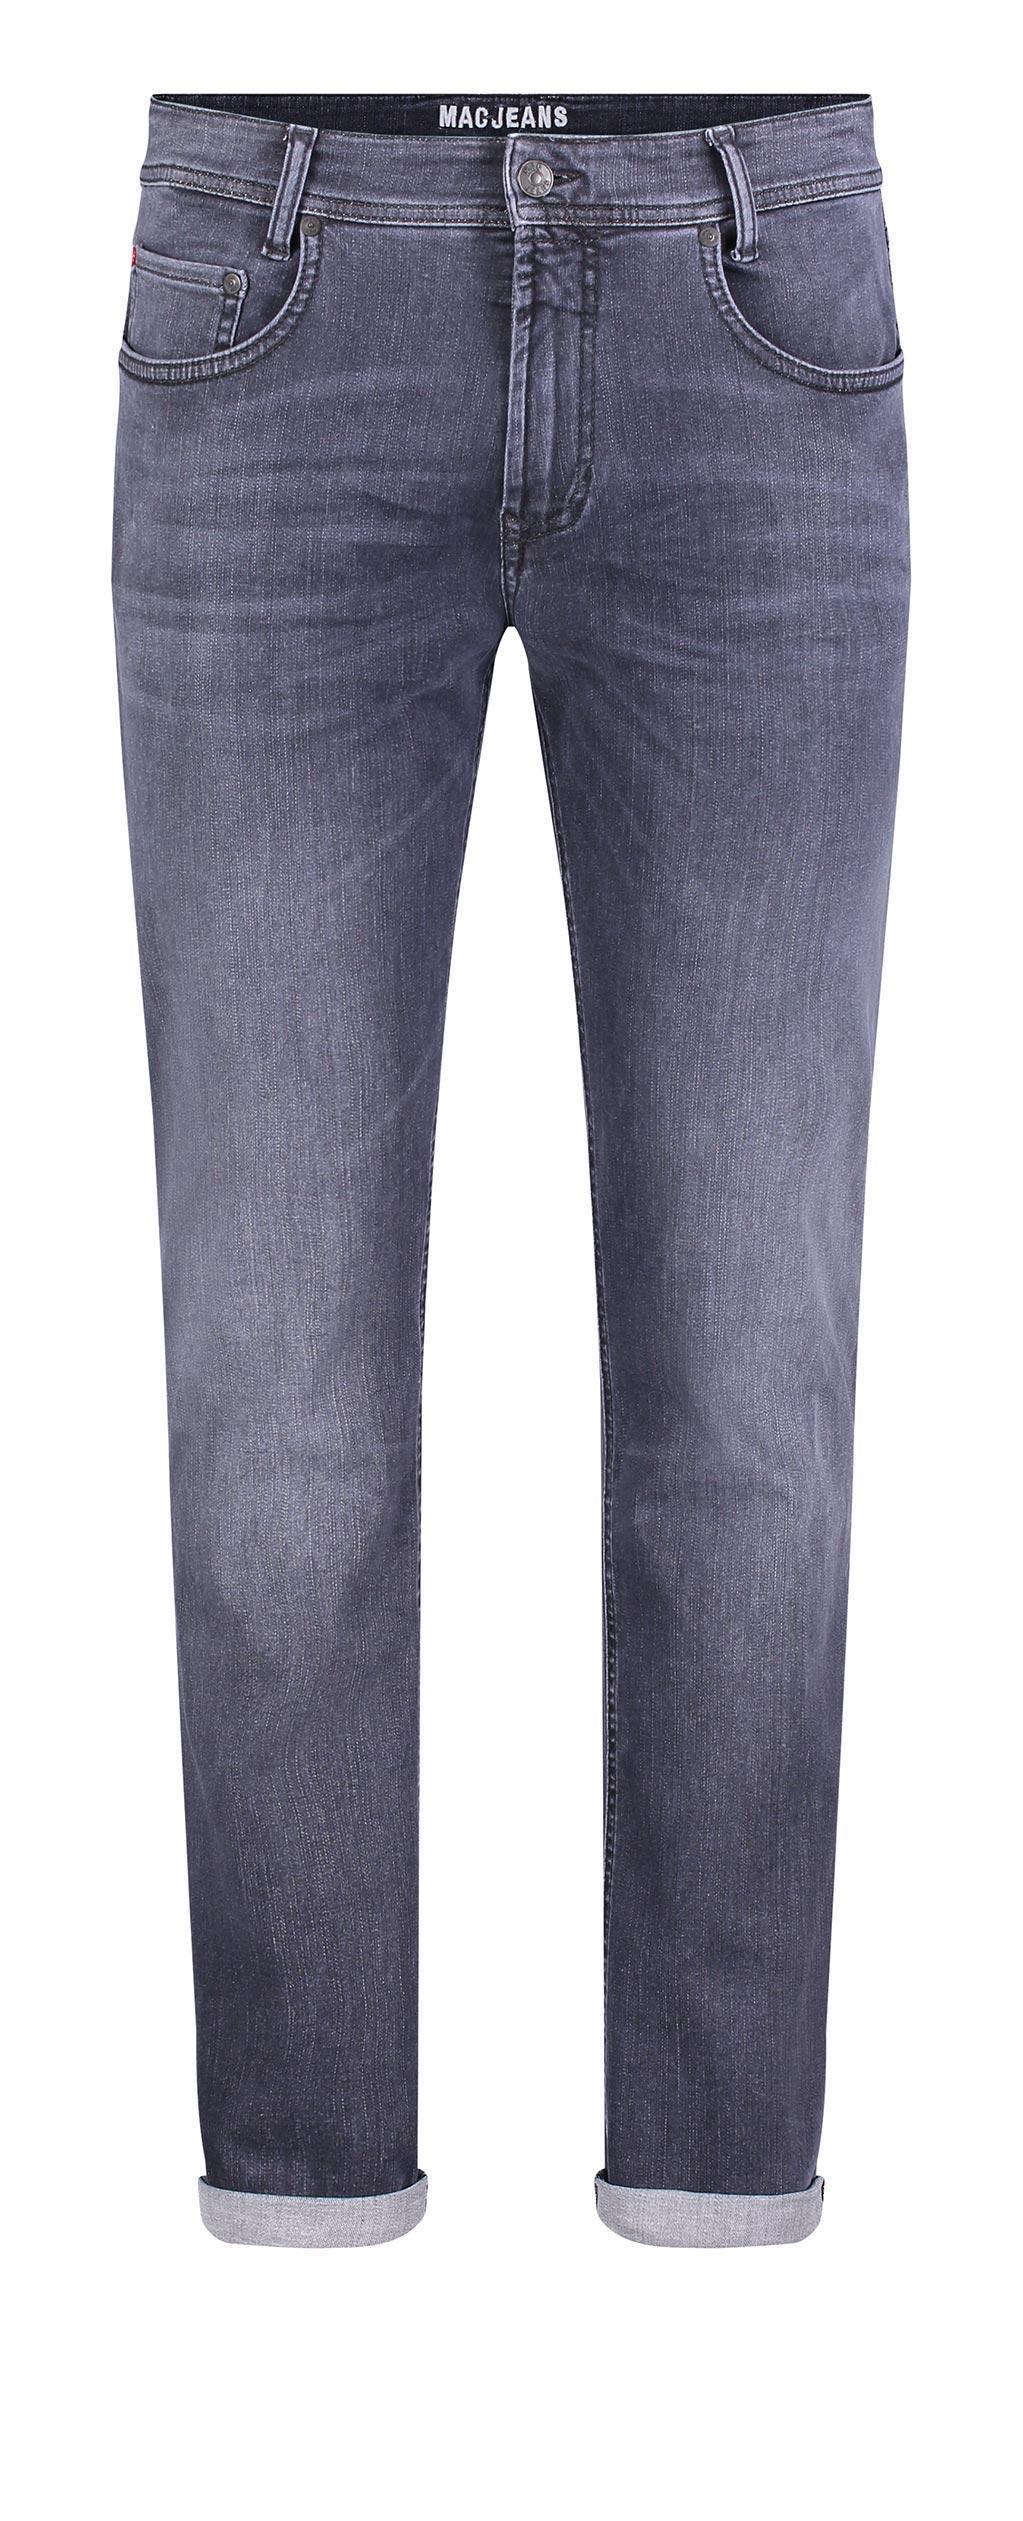 and Raggs - Dark in Jeans Women Grey – for Jean Mac Driver Men Fashion